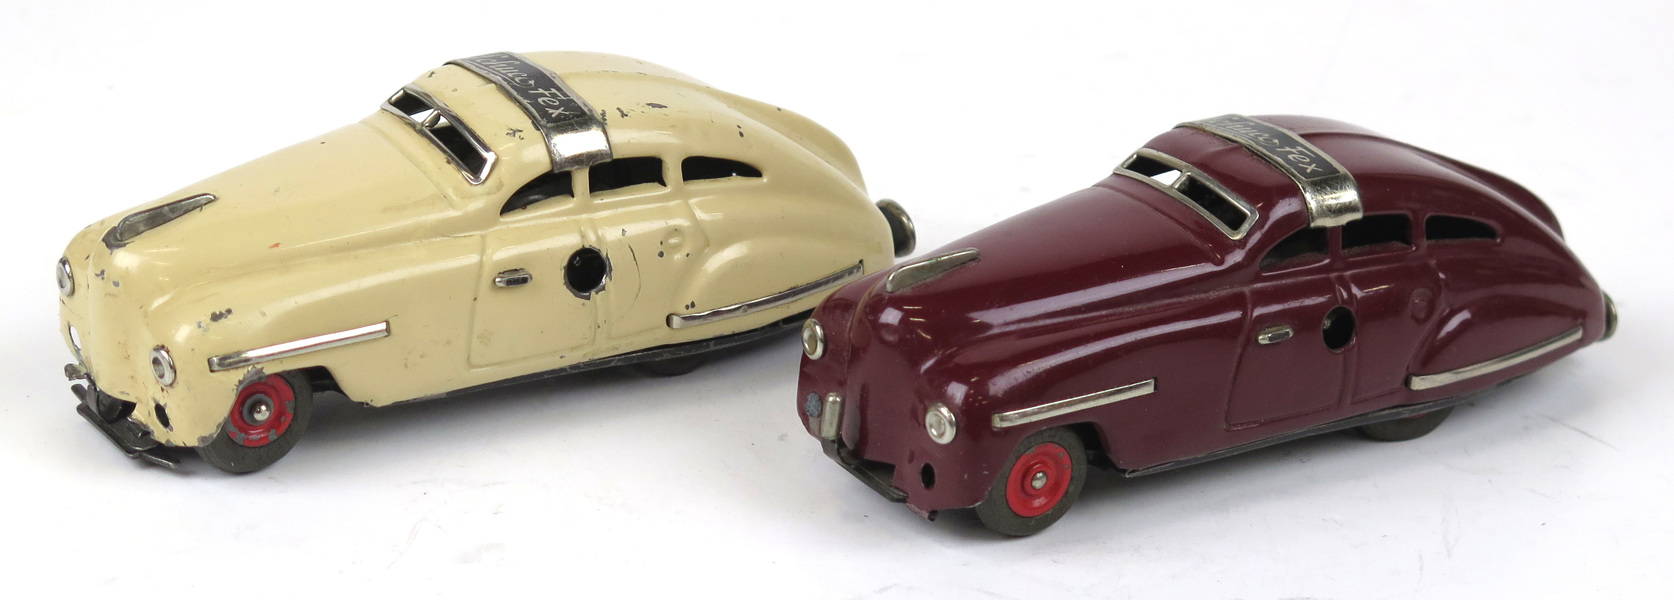 Modellbilar, 2 st, lackerad plåt, urverksdrivna, Schuco Fex 1111, Tyskland, omkring 1950, _7004a_8d8d81b868bb3db_lg.jpeg